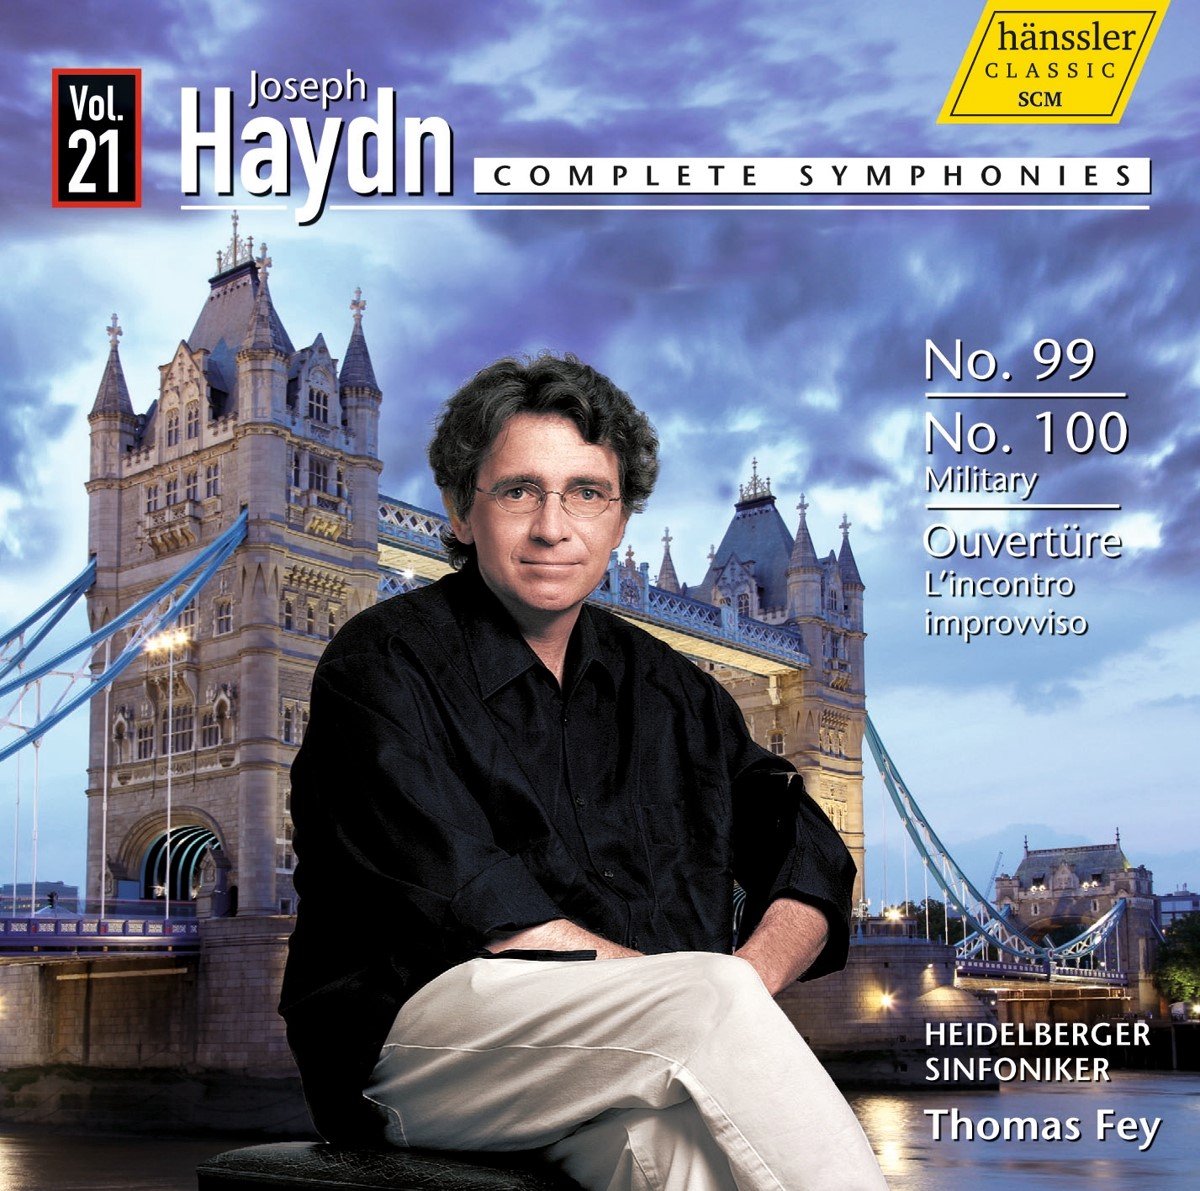 Heidelberger Sinfoniker - Haydn: Symphonies 99 & 100 (CD) - Heidelberger Sinfoniker